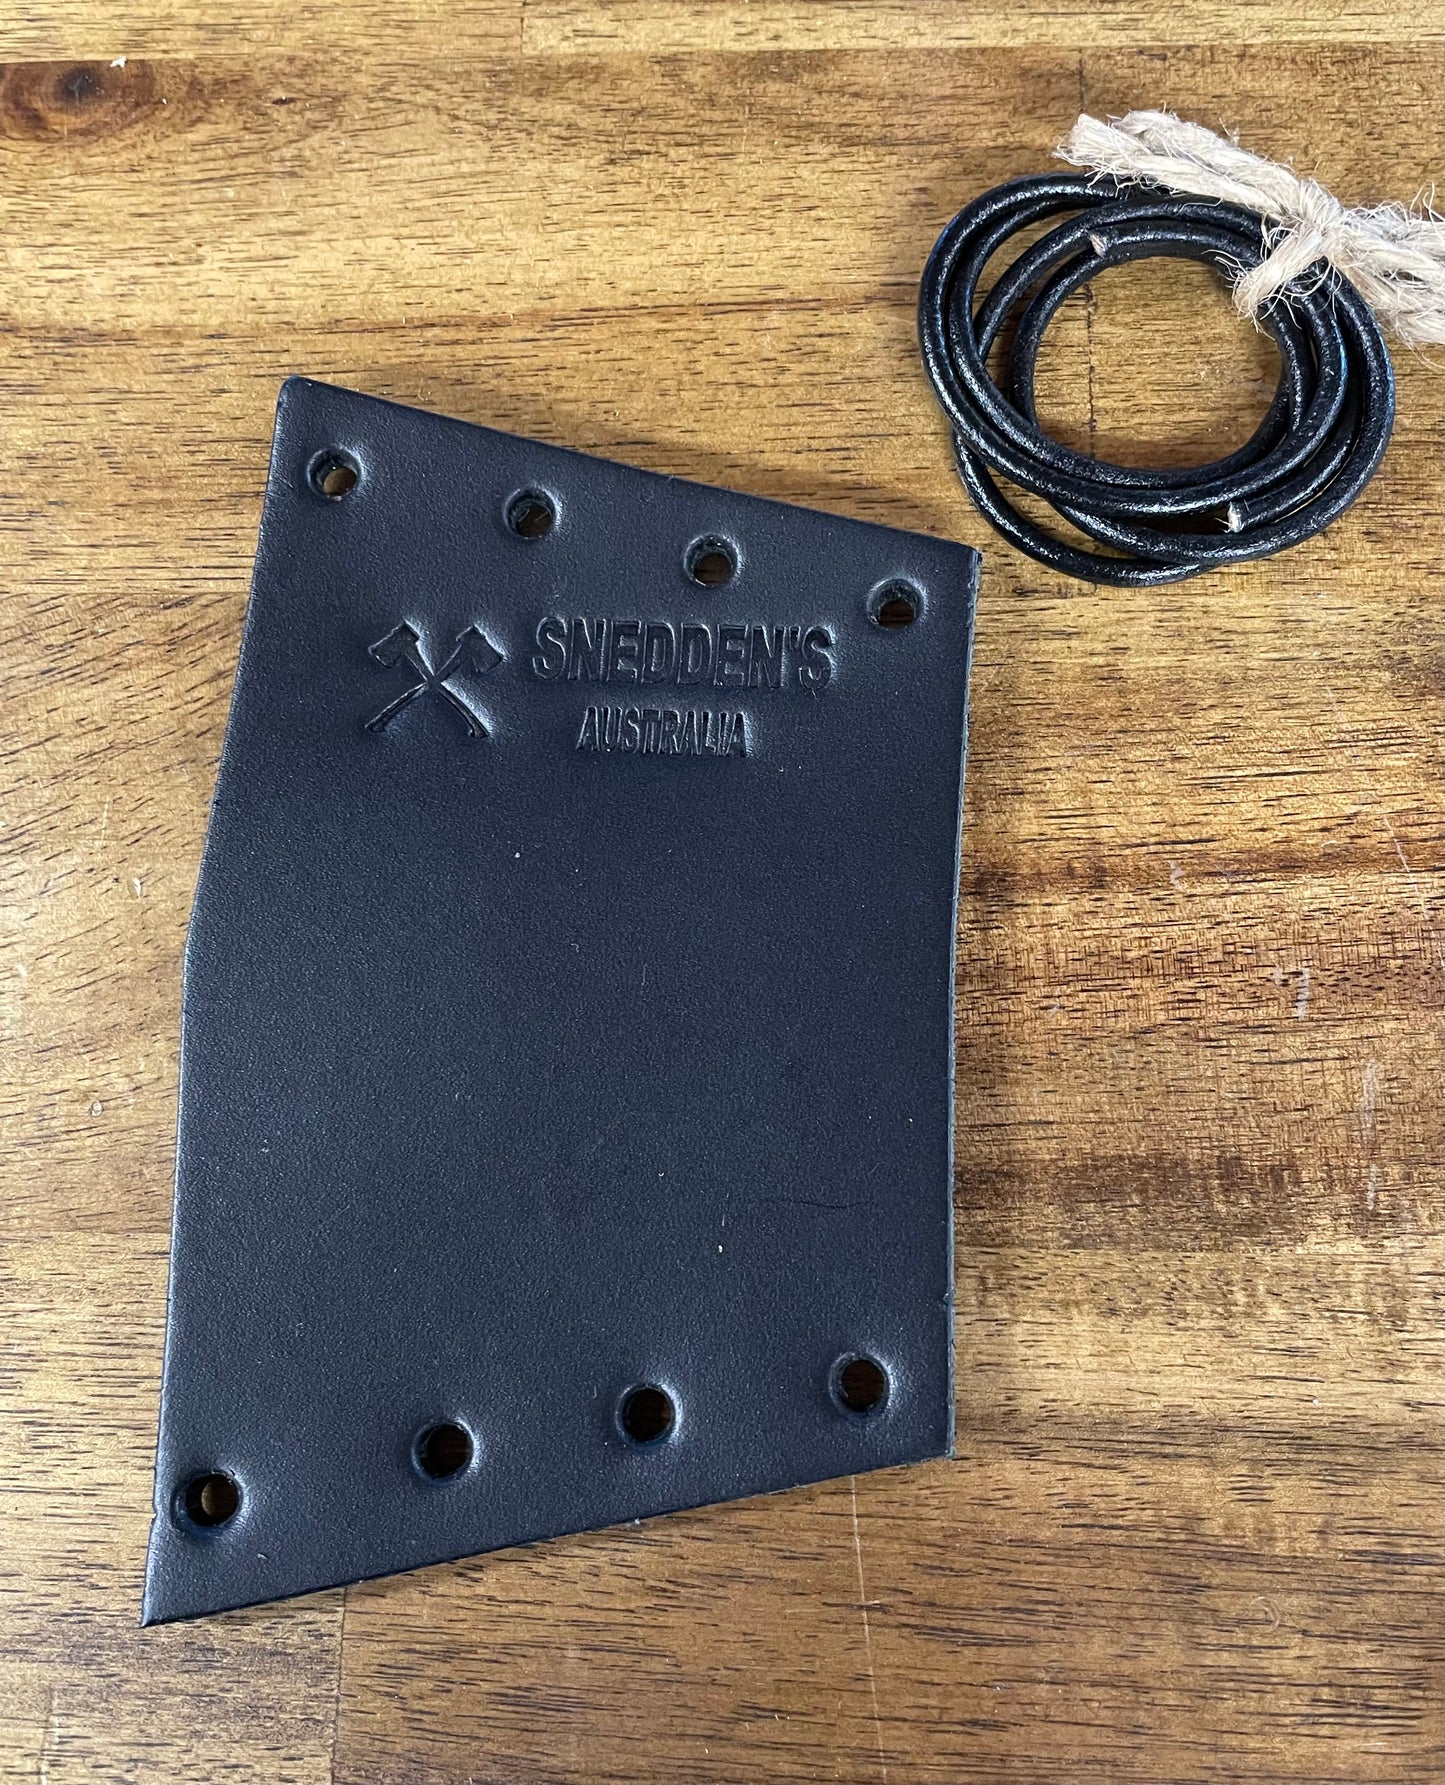 Razorback Hatchet handle protector. Black leather